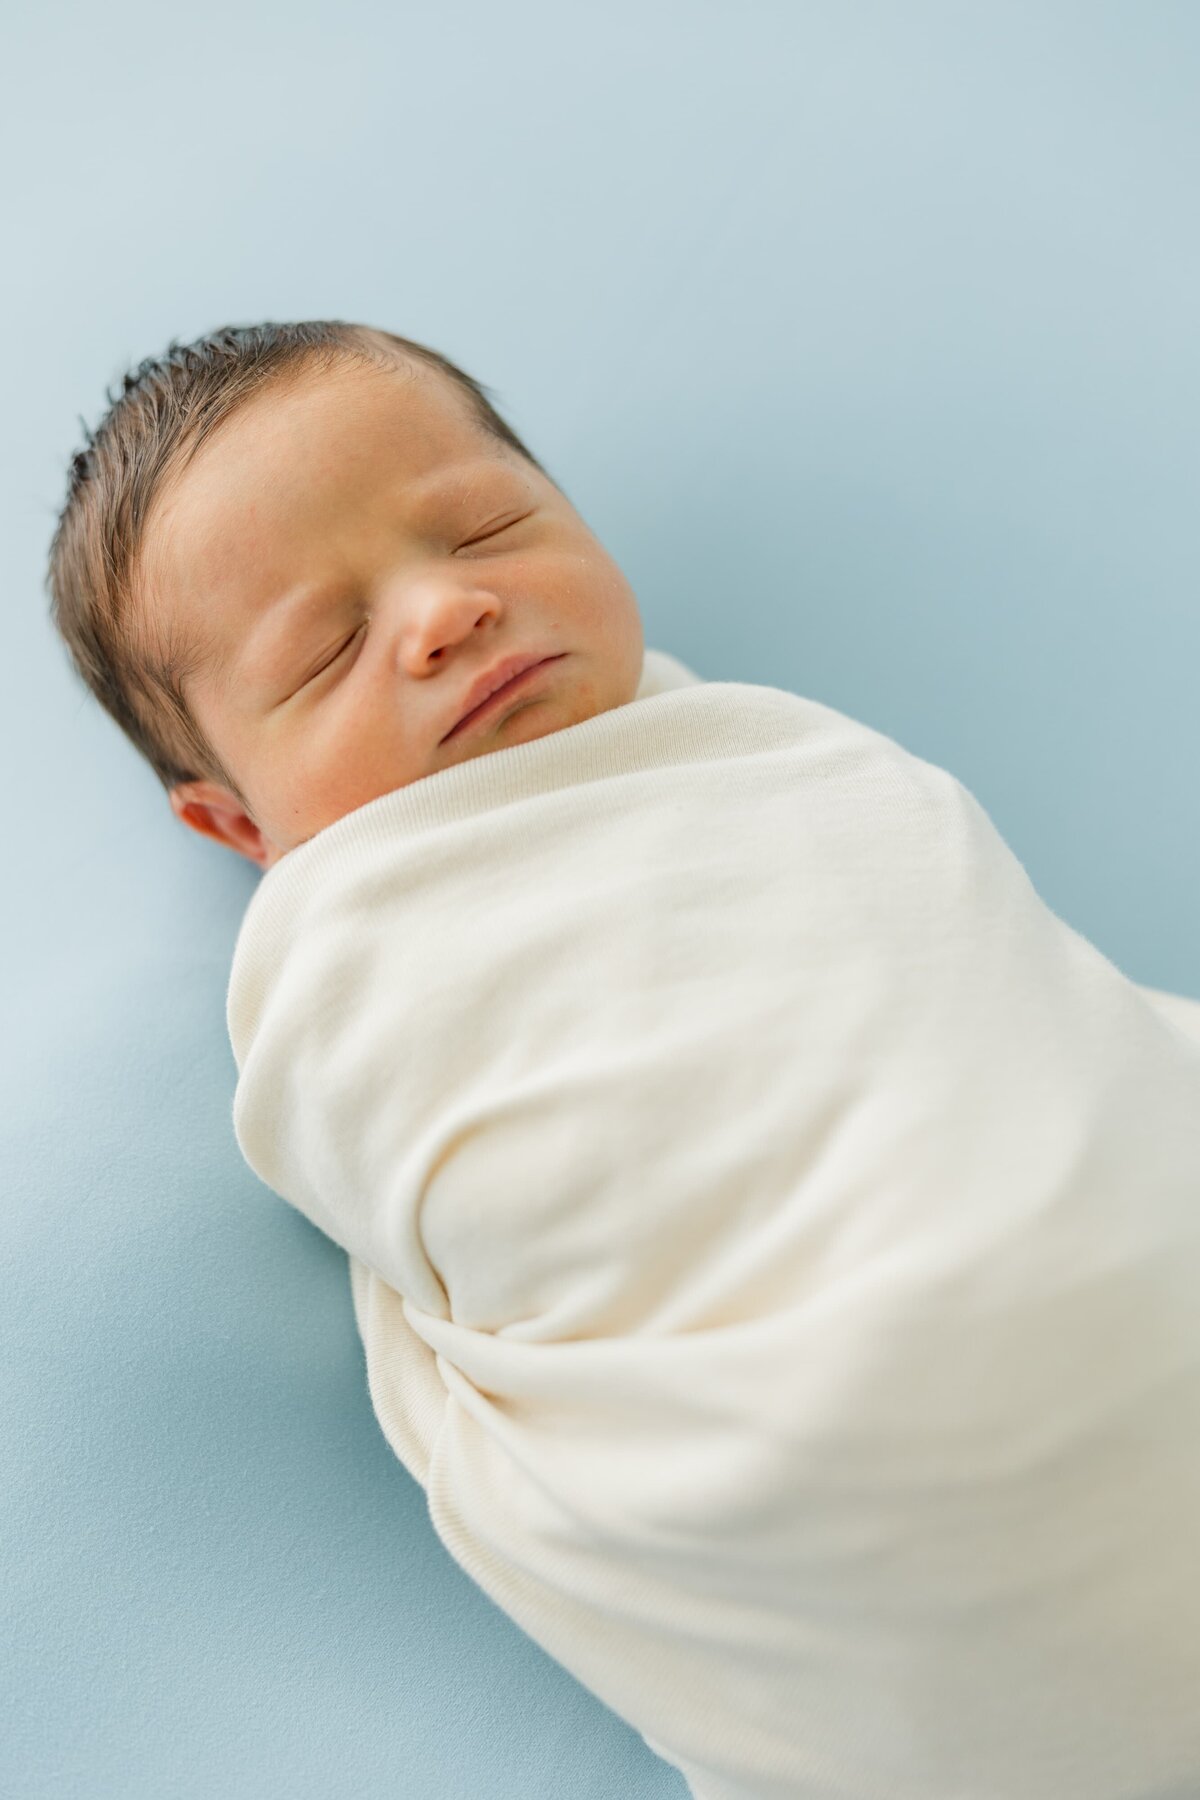 newborn baby swaddled during photo shoot